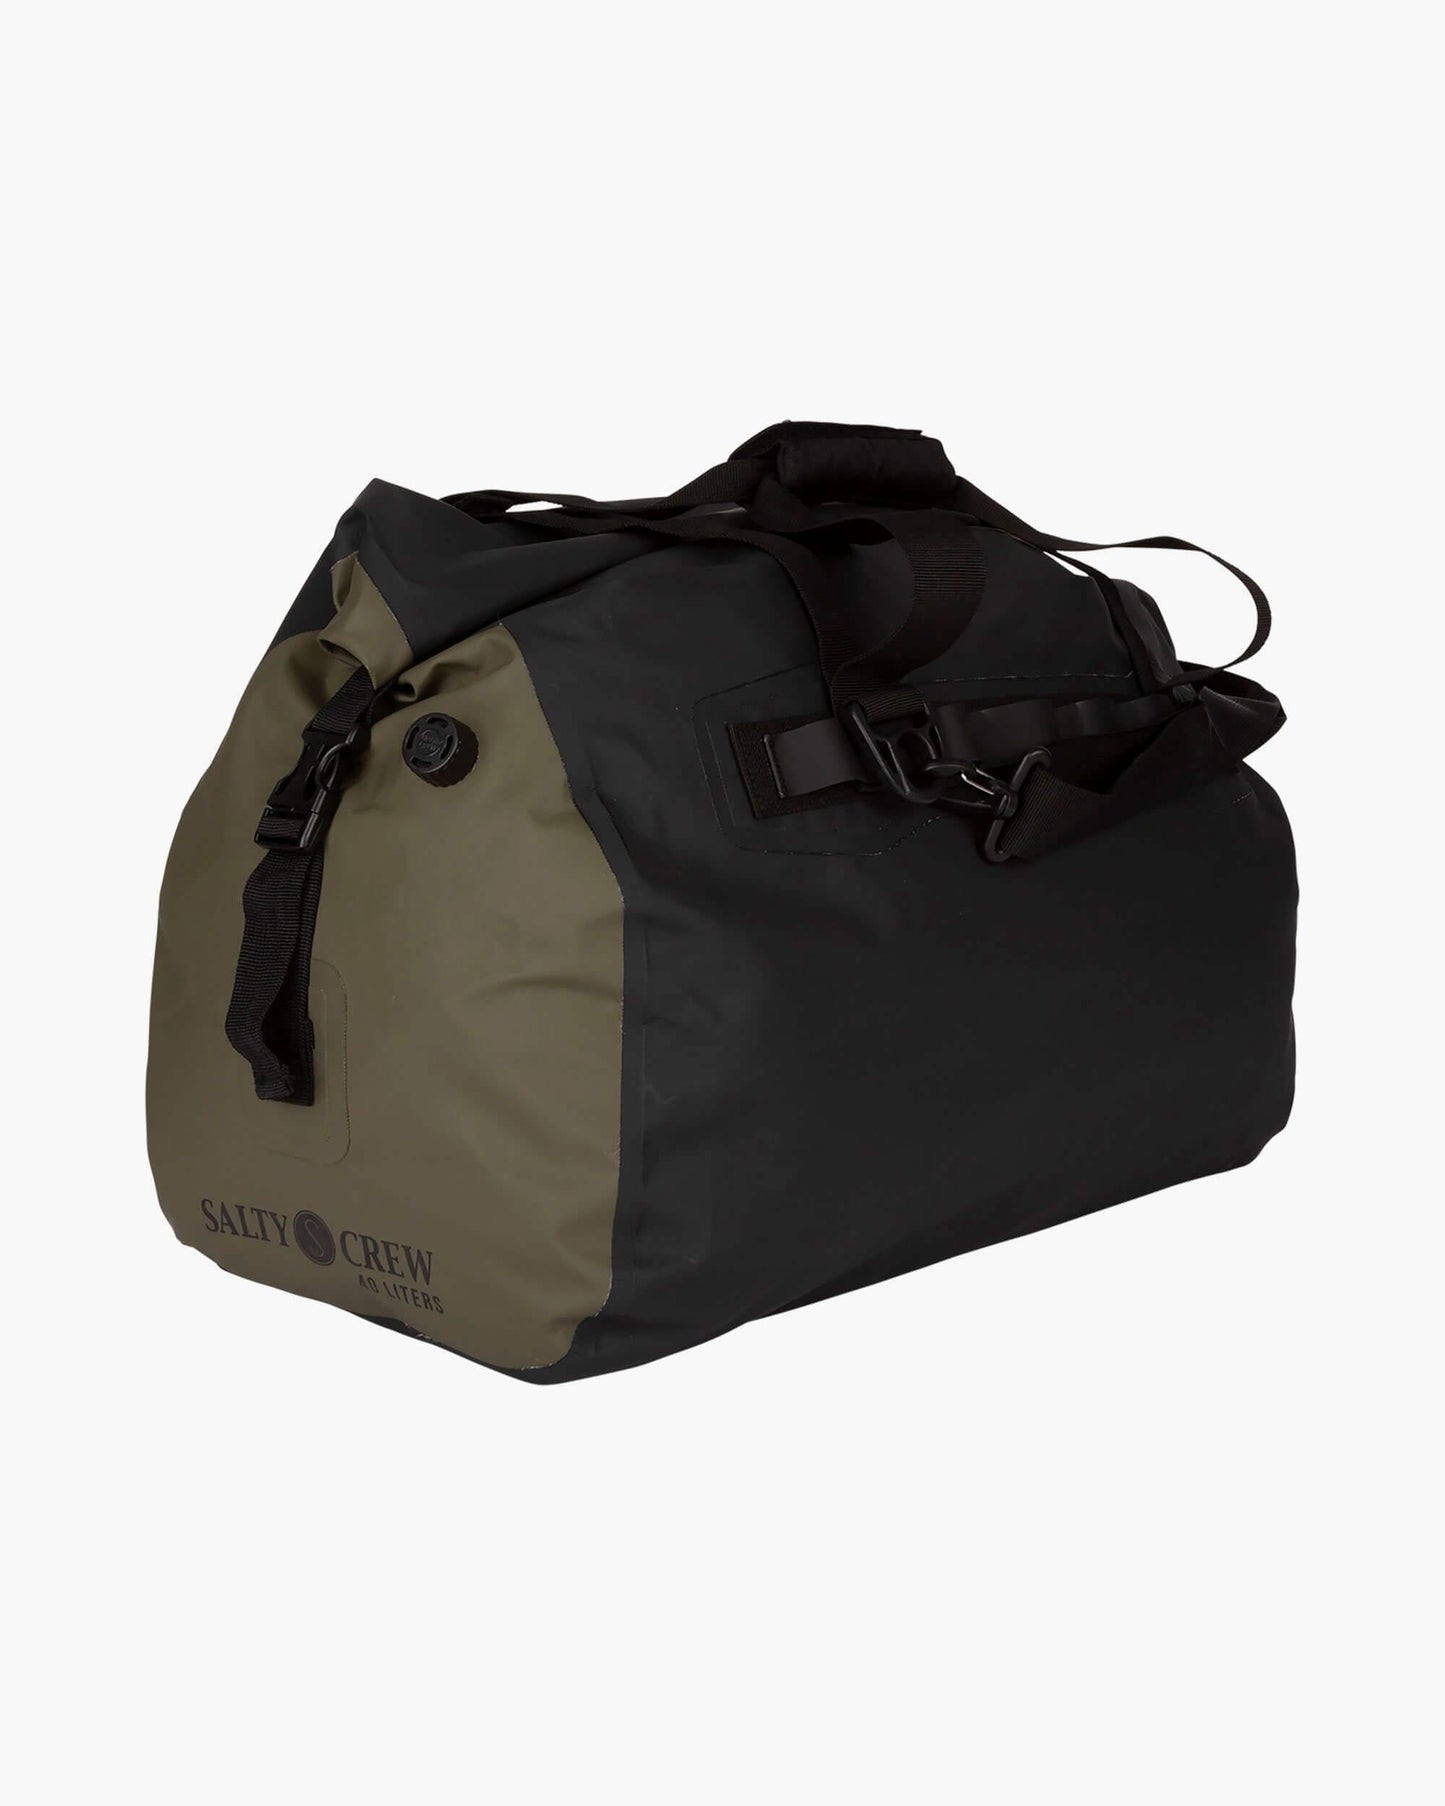 Salty Crew Hommes - Voyager Black/Military Duffle Bag